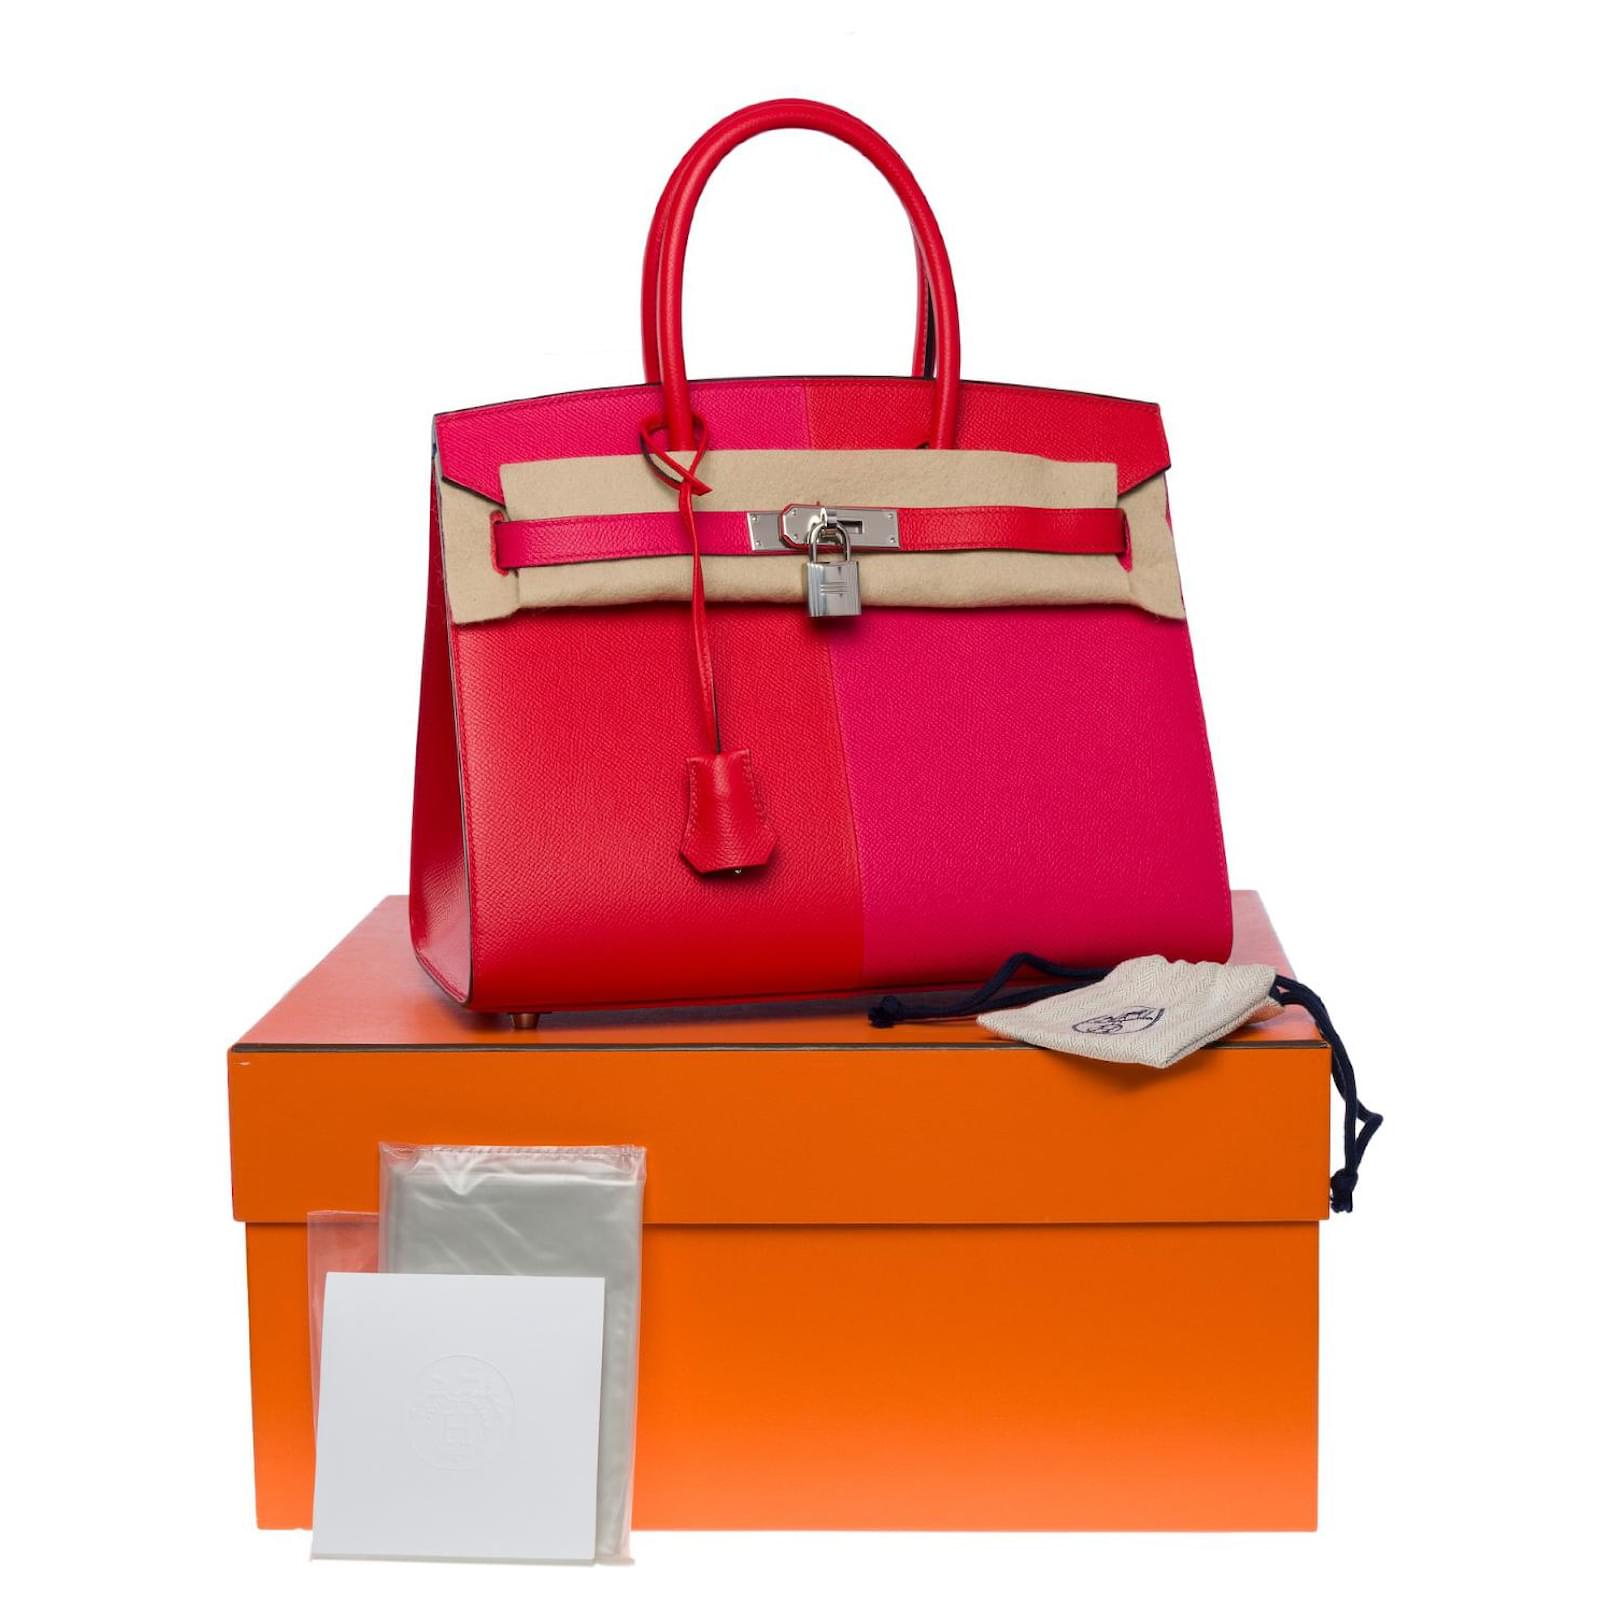 Hermes Birkin - a favorite handbag that has won hearts